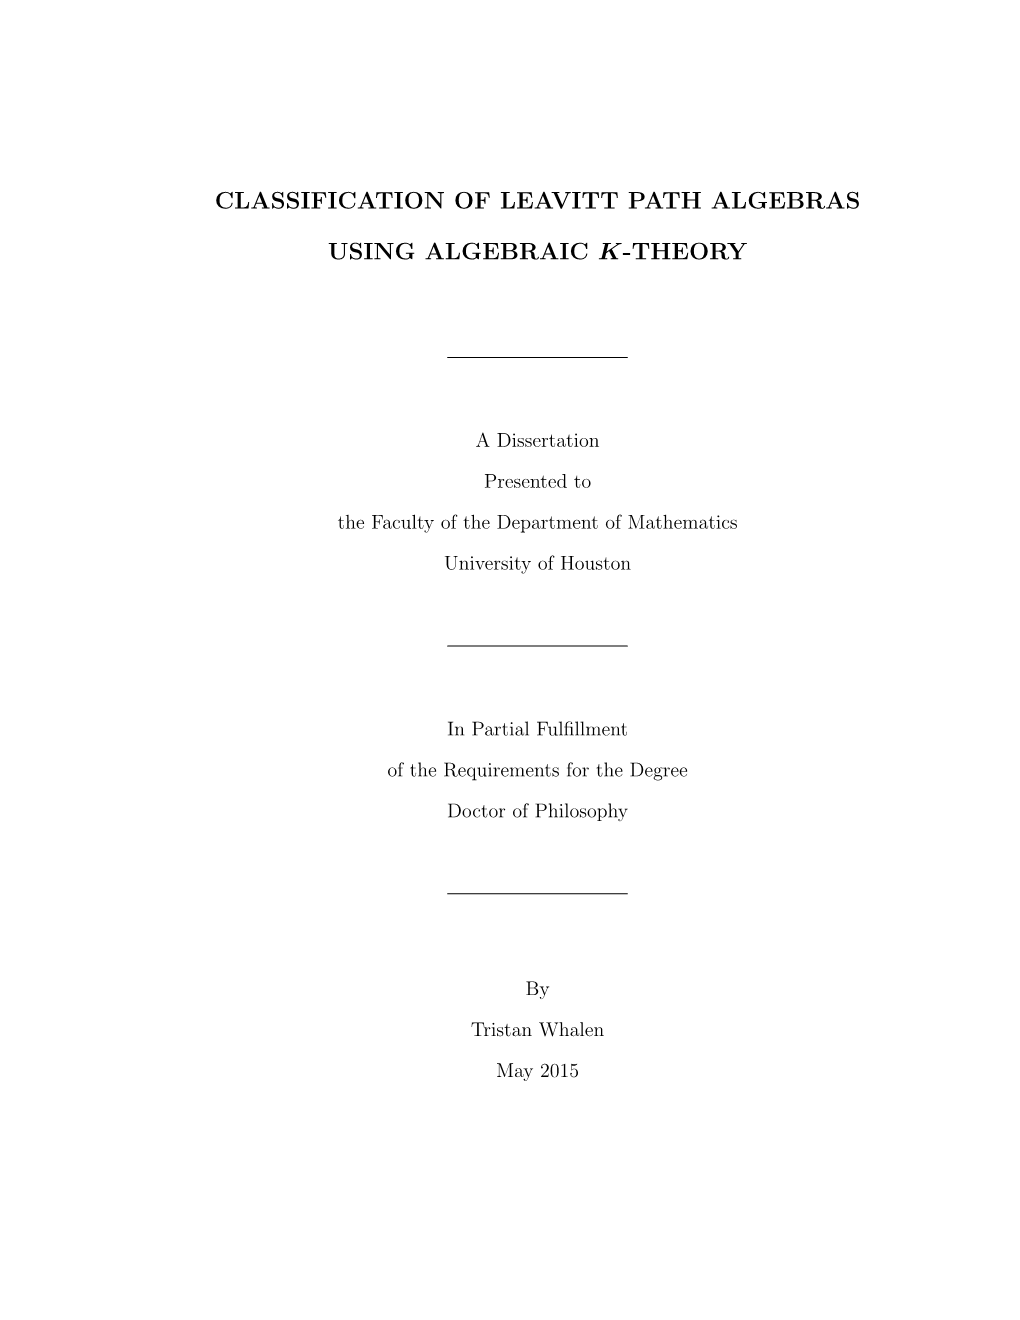 Classification of Leavitt Path Algebras Using Algebraic K-Theory